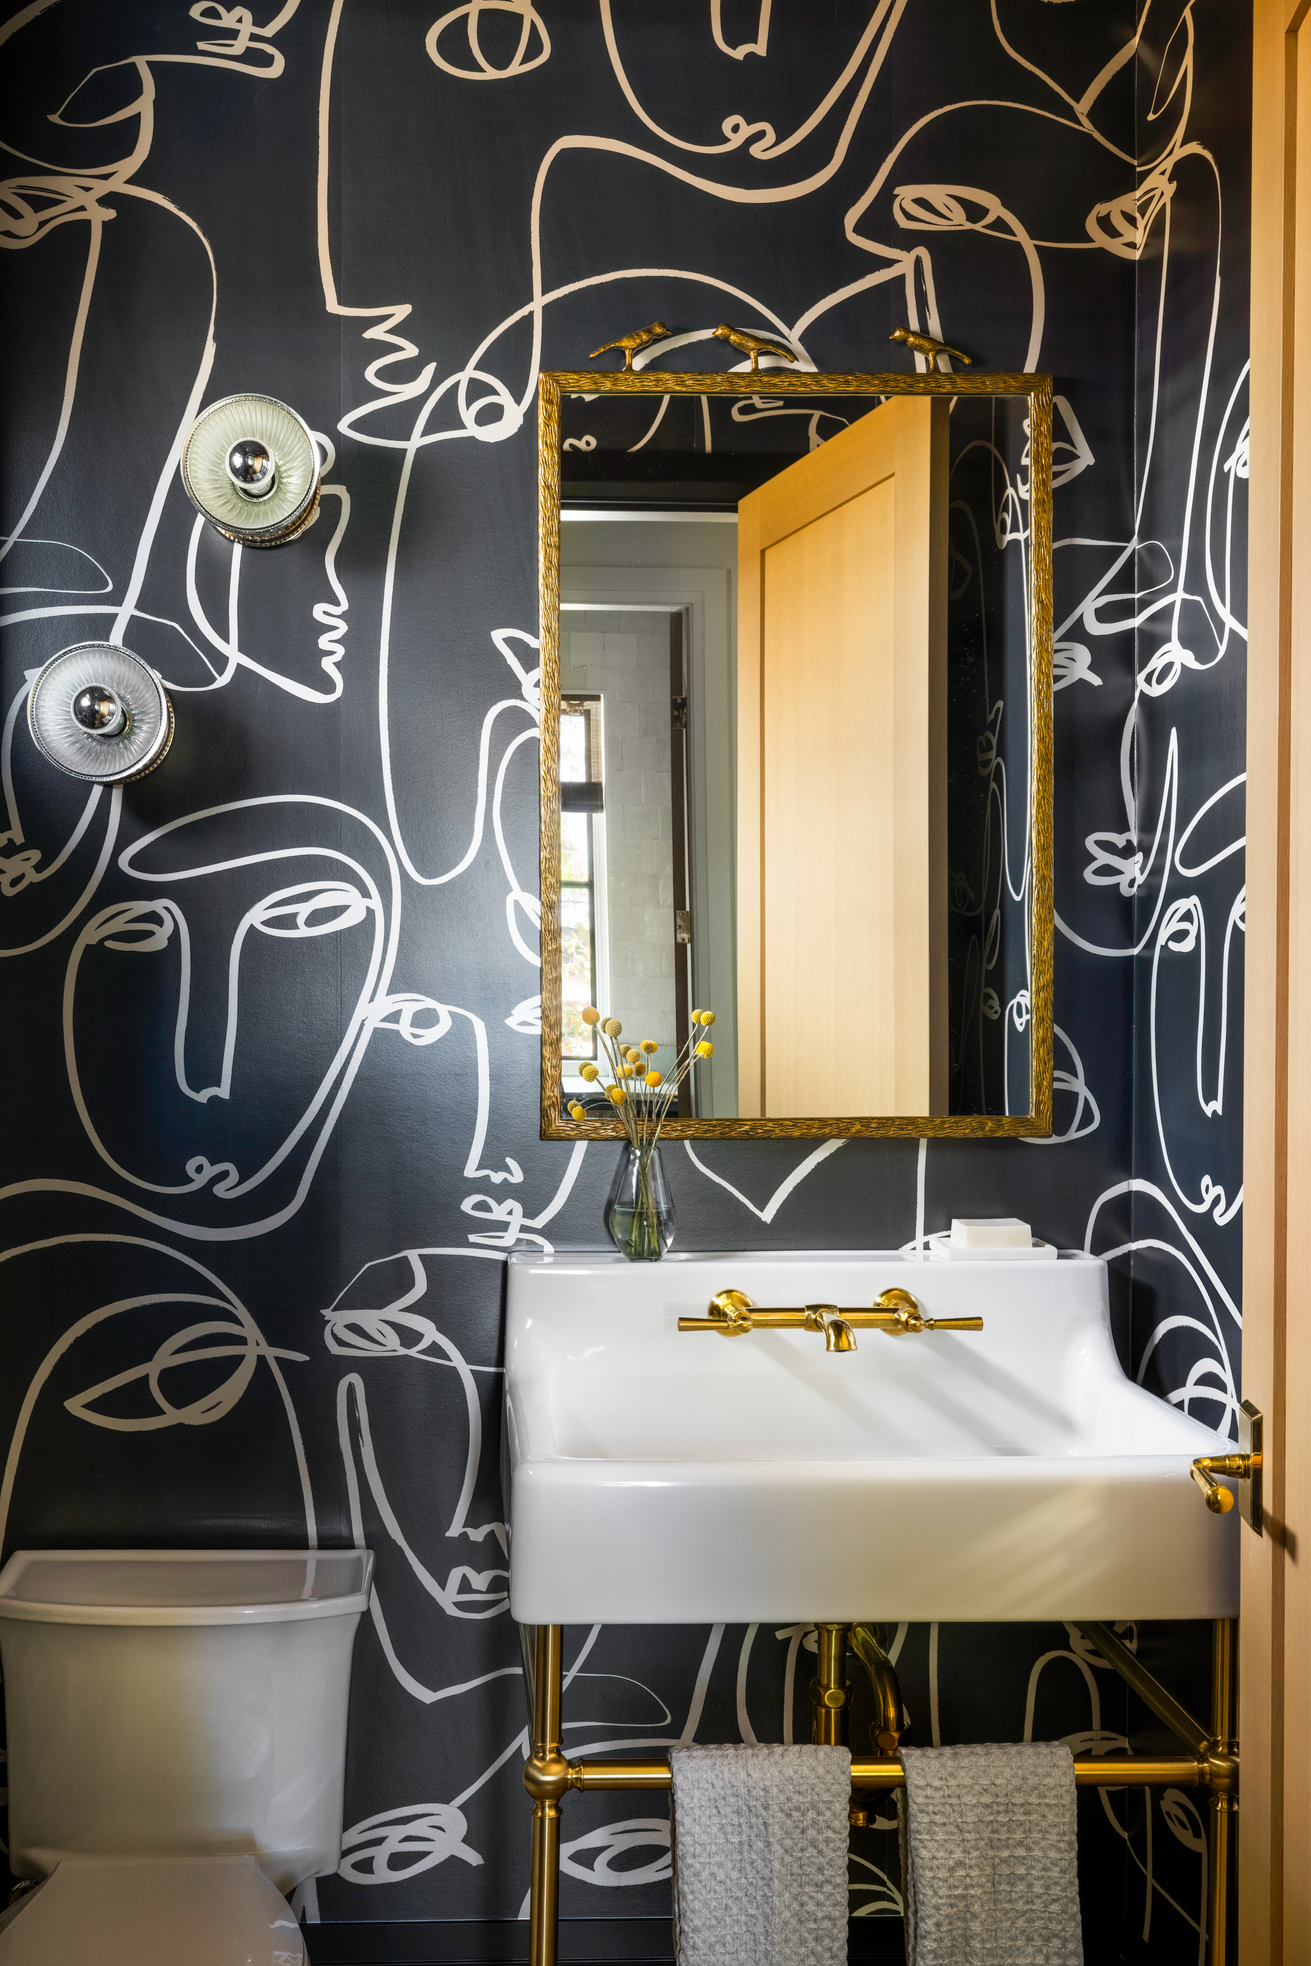 20+ Above Toilet Decor Ideas For Your Bathroom - Making Manzanita